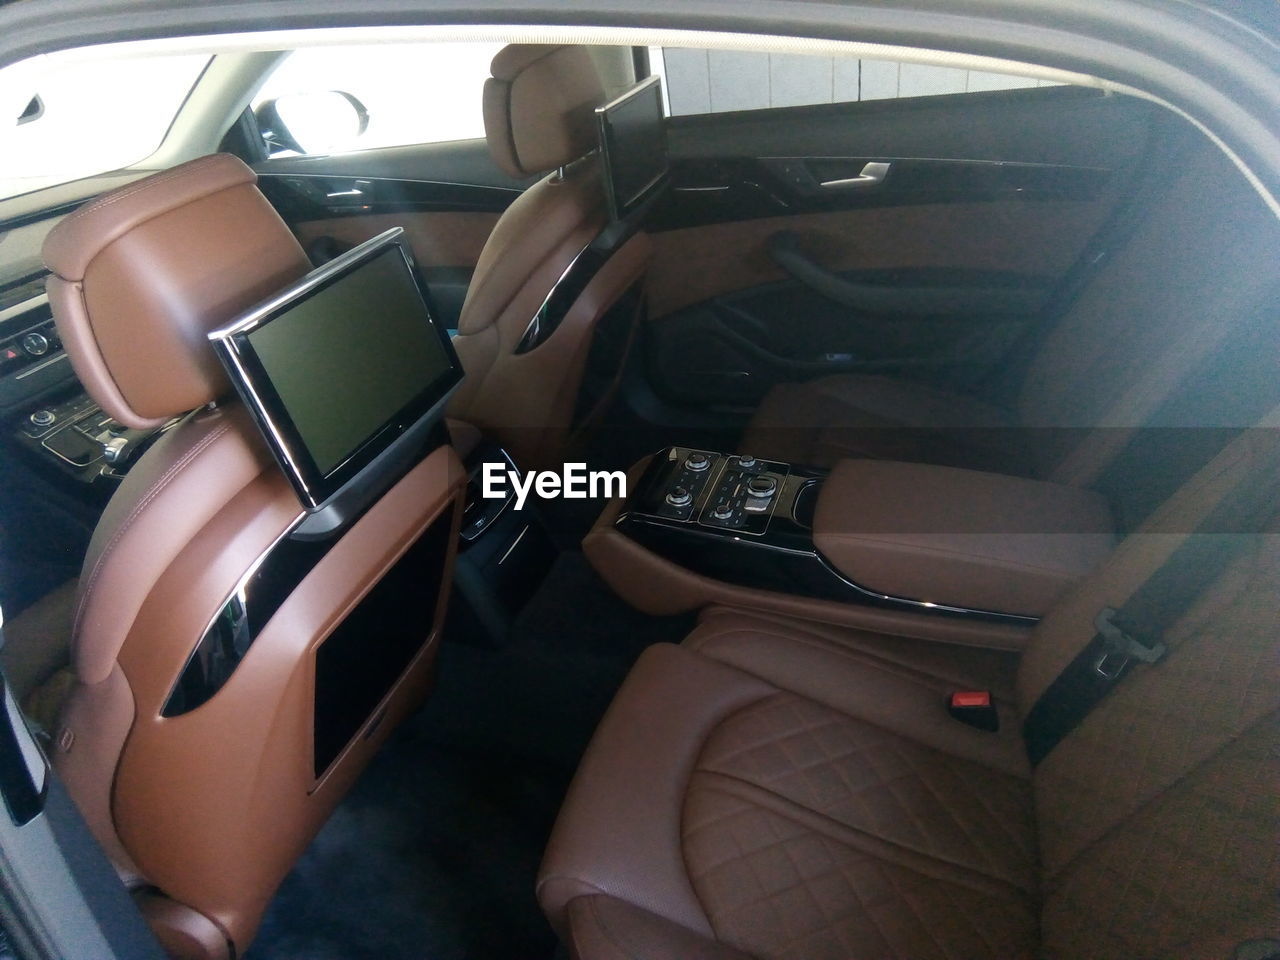 Interior of car seen through window